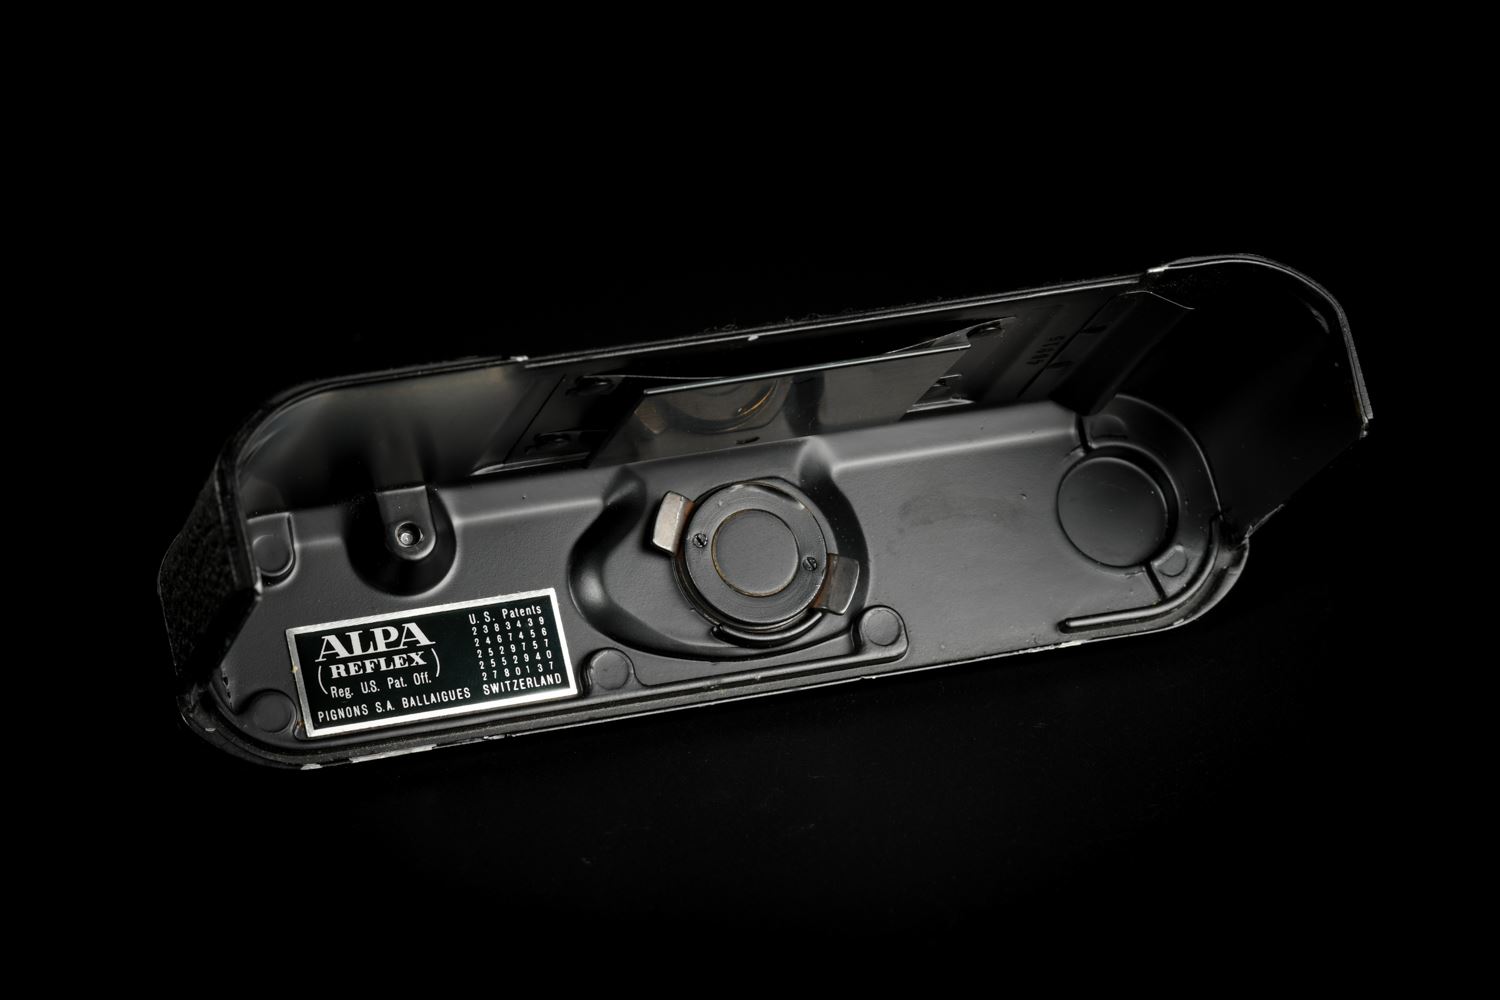 Picture of Alpa Reflex 6c Set with Kern Macro-Switar 50mm f/1.8 All Black